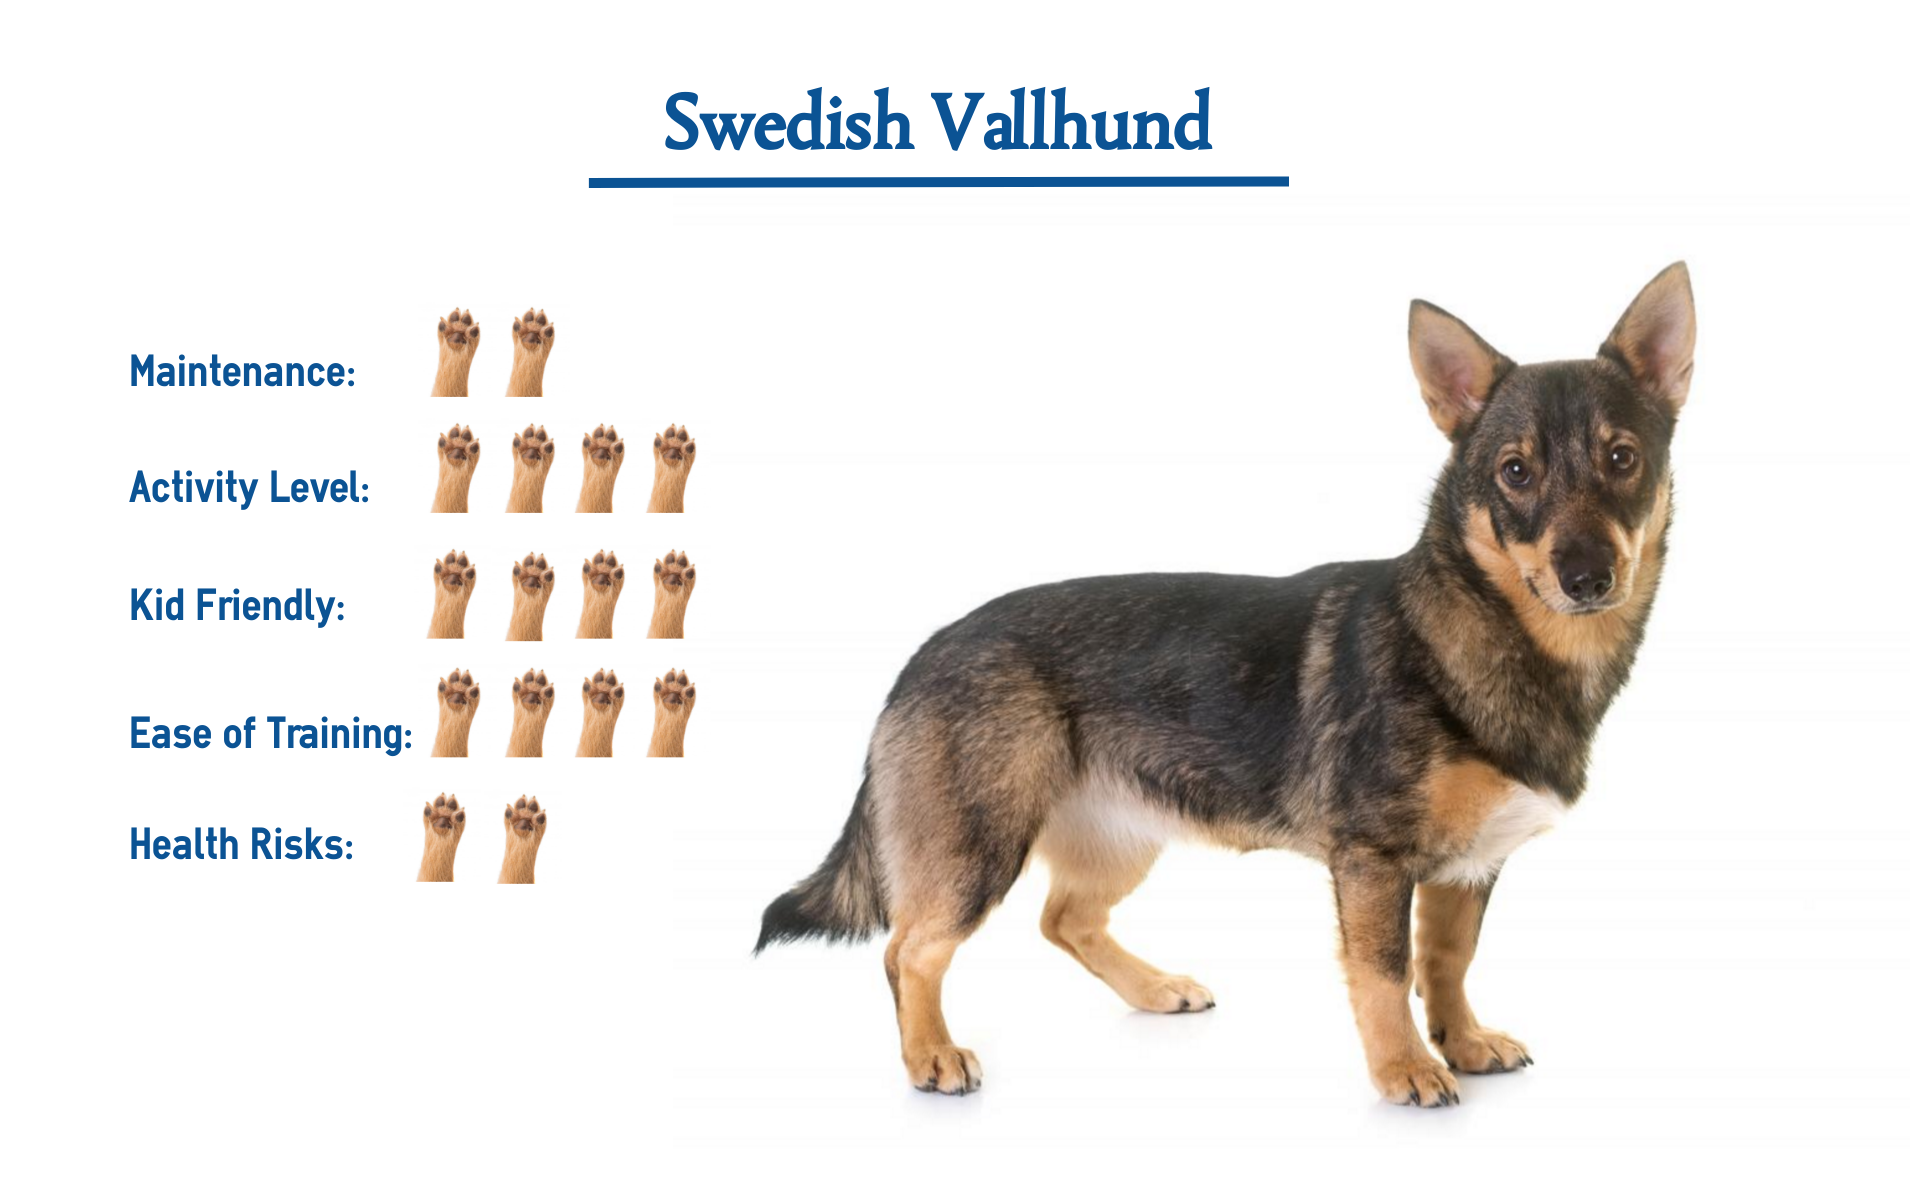 Swedish Vallhund Images Free Download On Freepik | vlr.eng.br